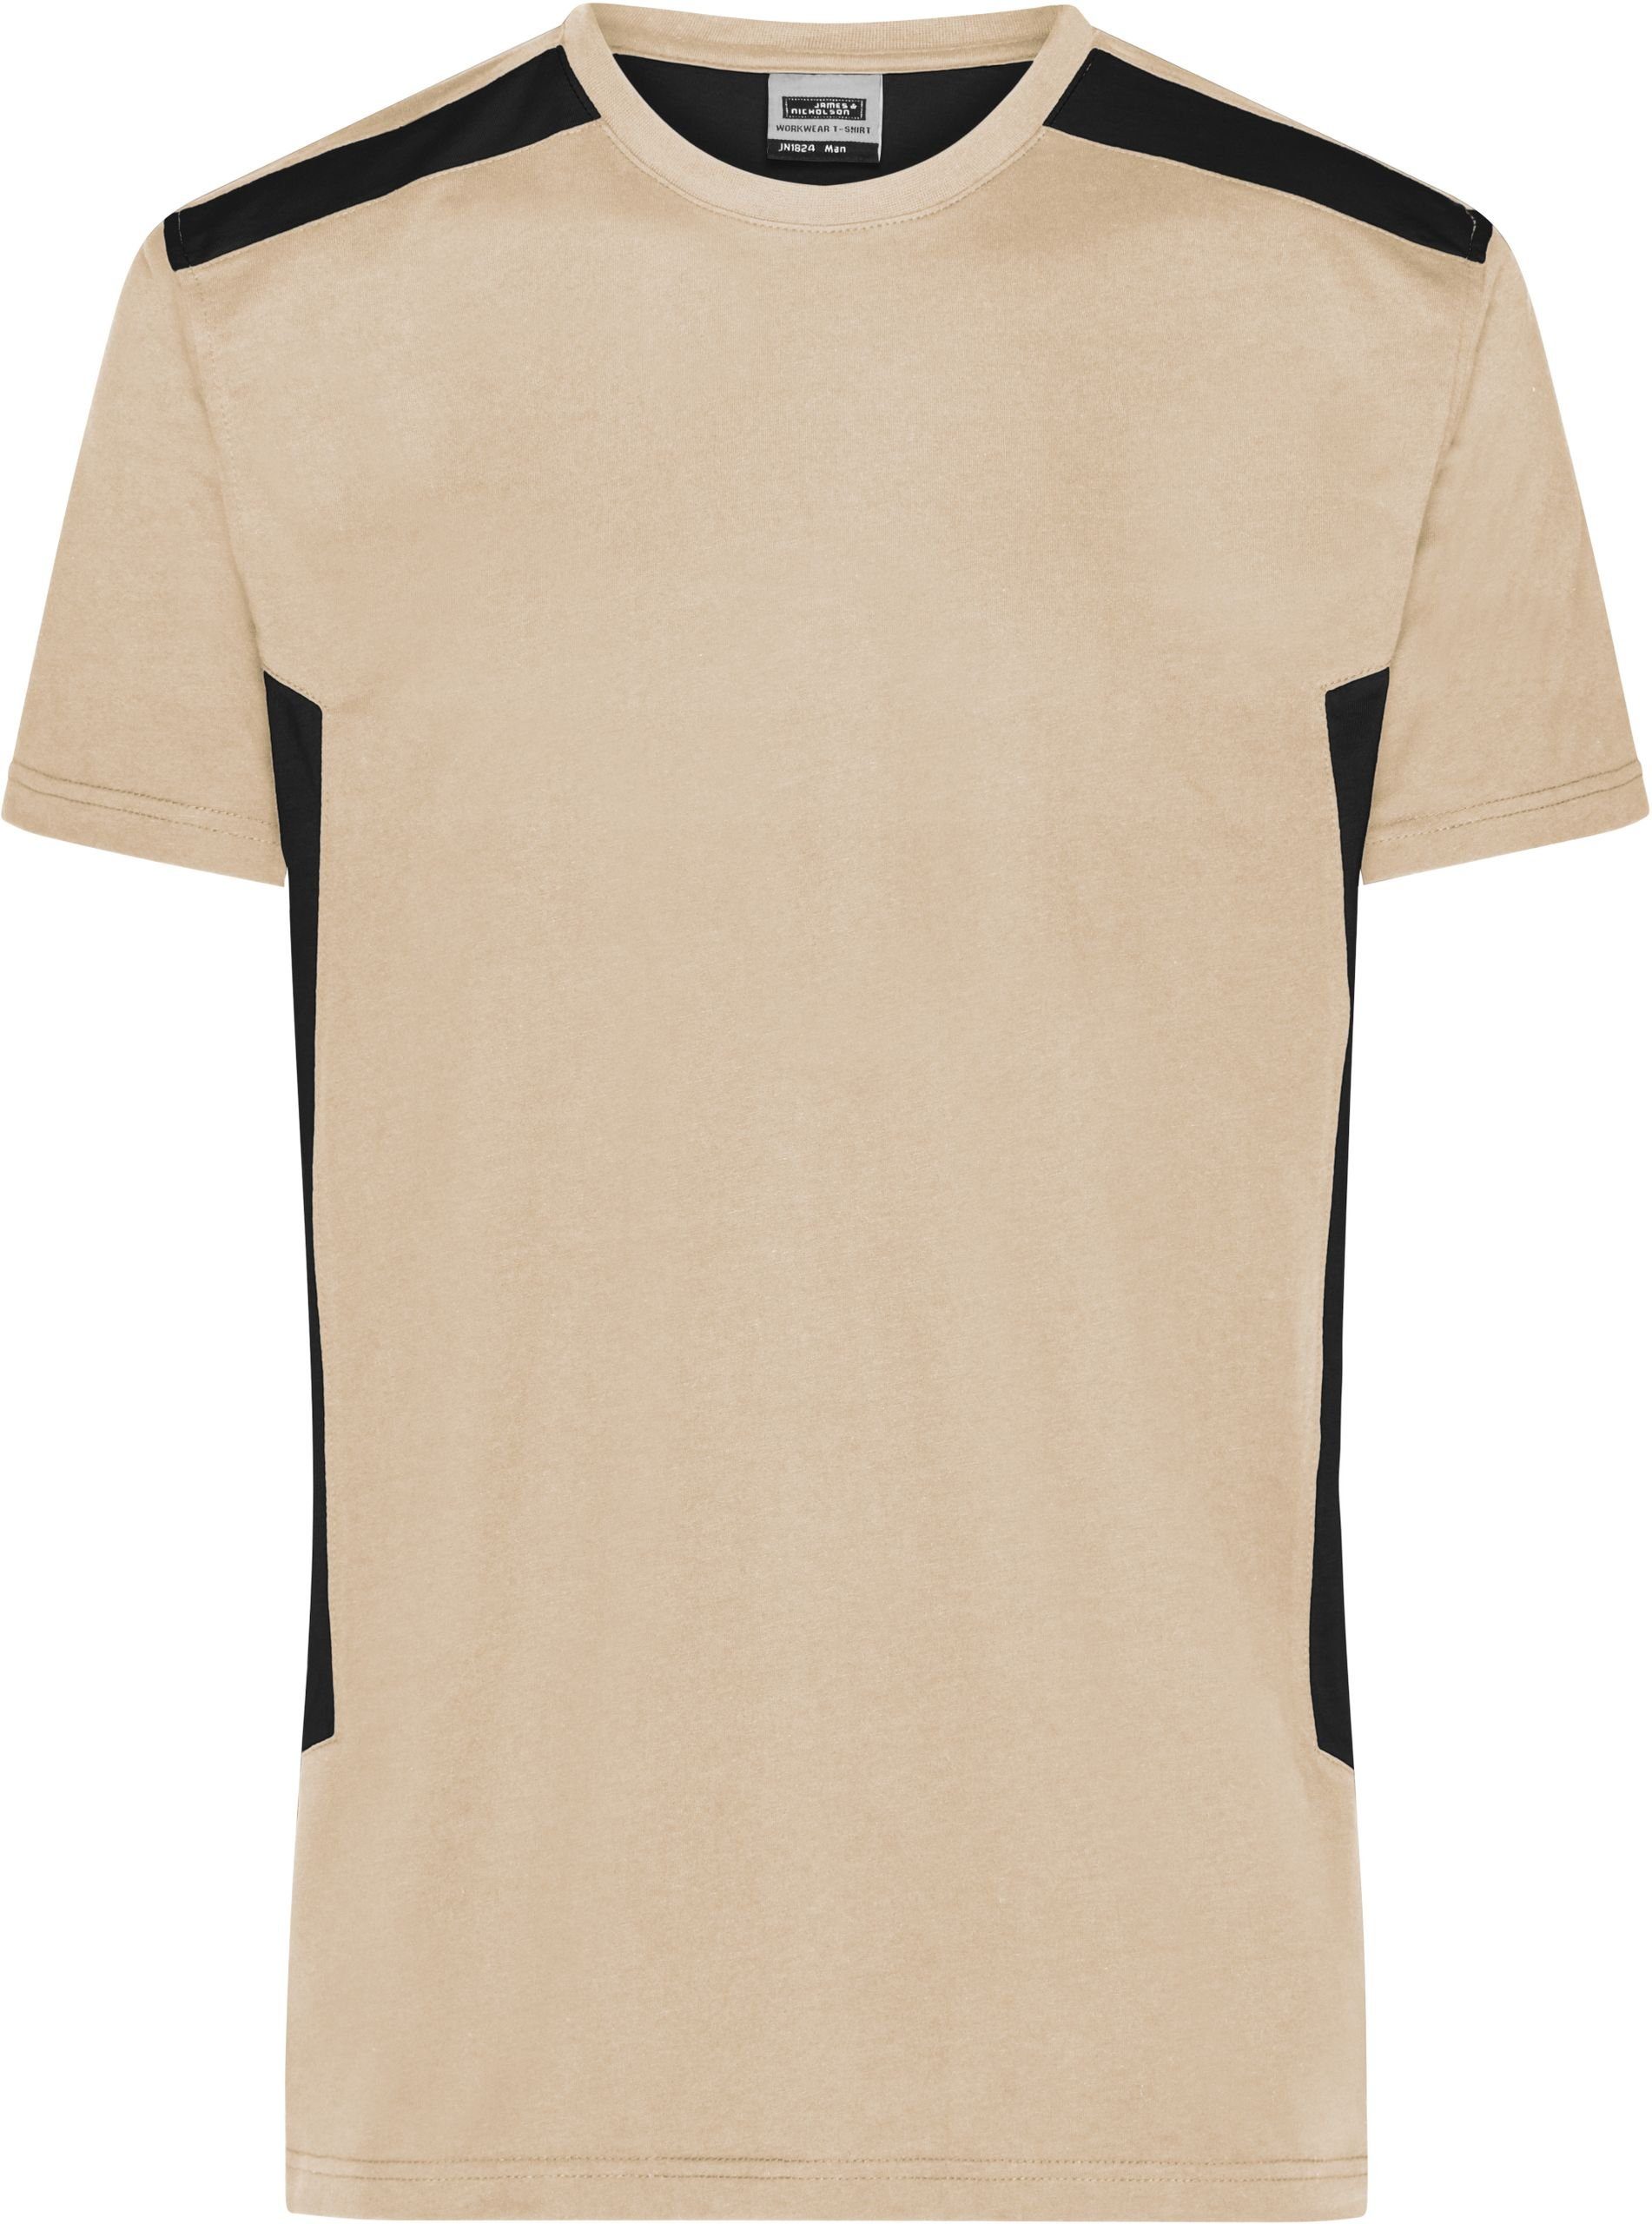 James & Nicholson T-Shirt Herren Workwear T-Shirt - Strong stone/black